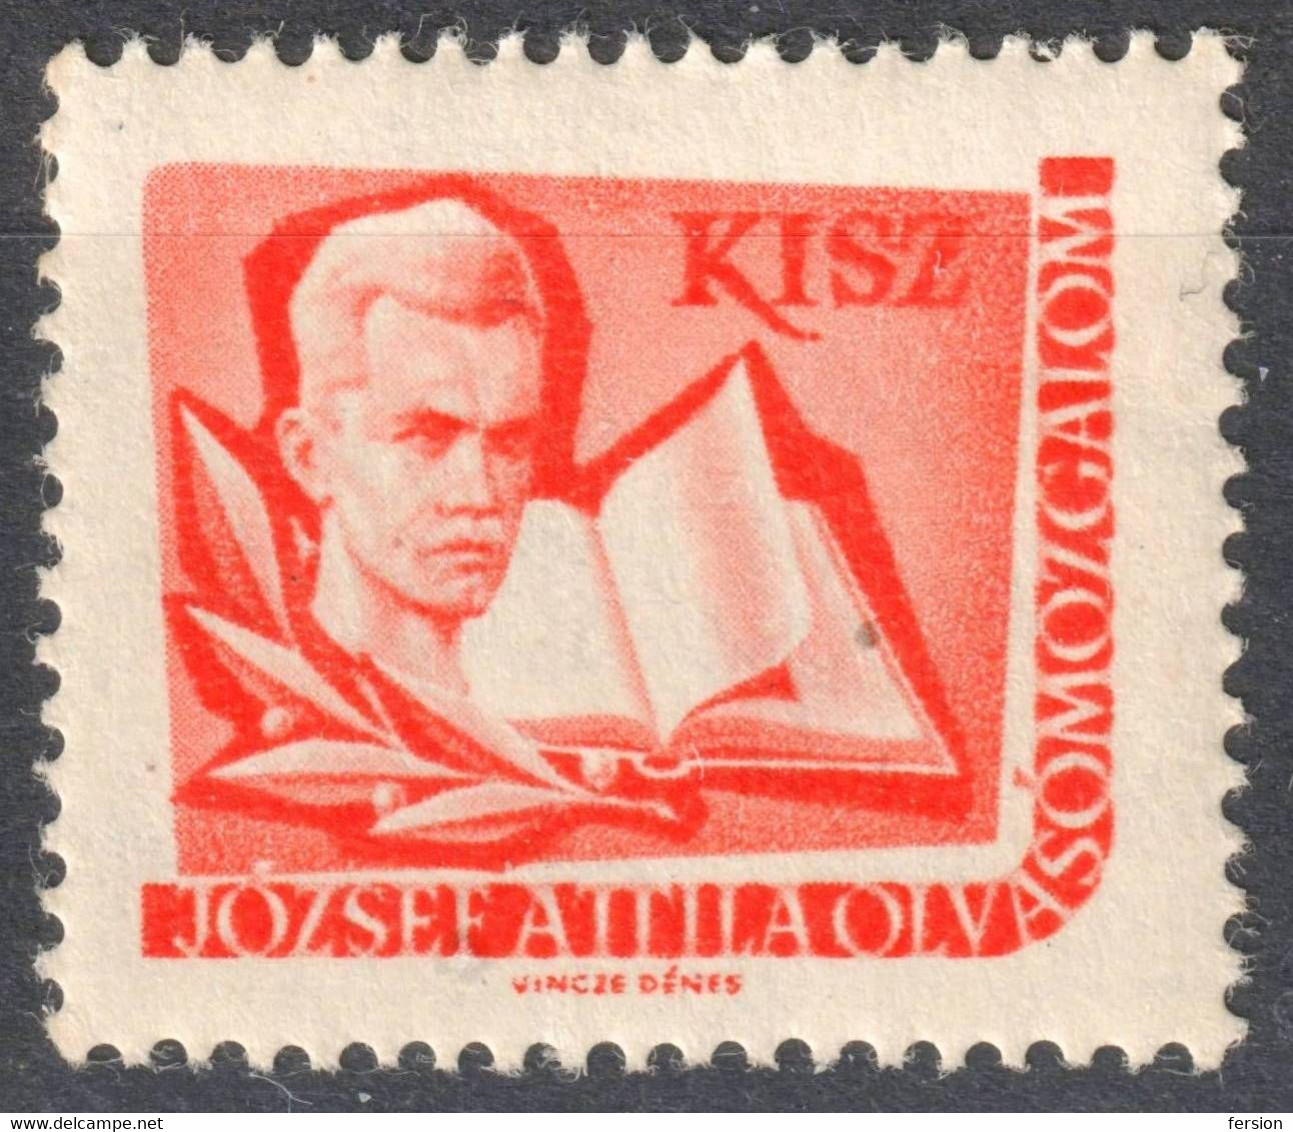 József Attila Poet Book KISZ Hungarian Young Communist League LIBRARY Member LABEL CINDERELLA VIGNETTE Hungary - Dienstmarken